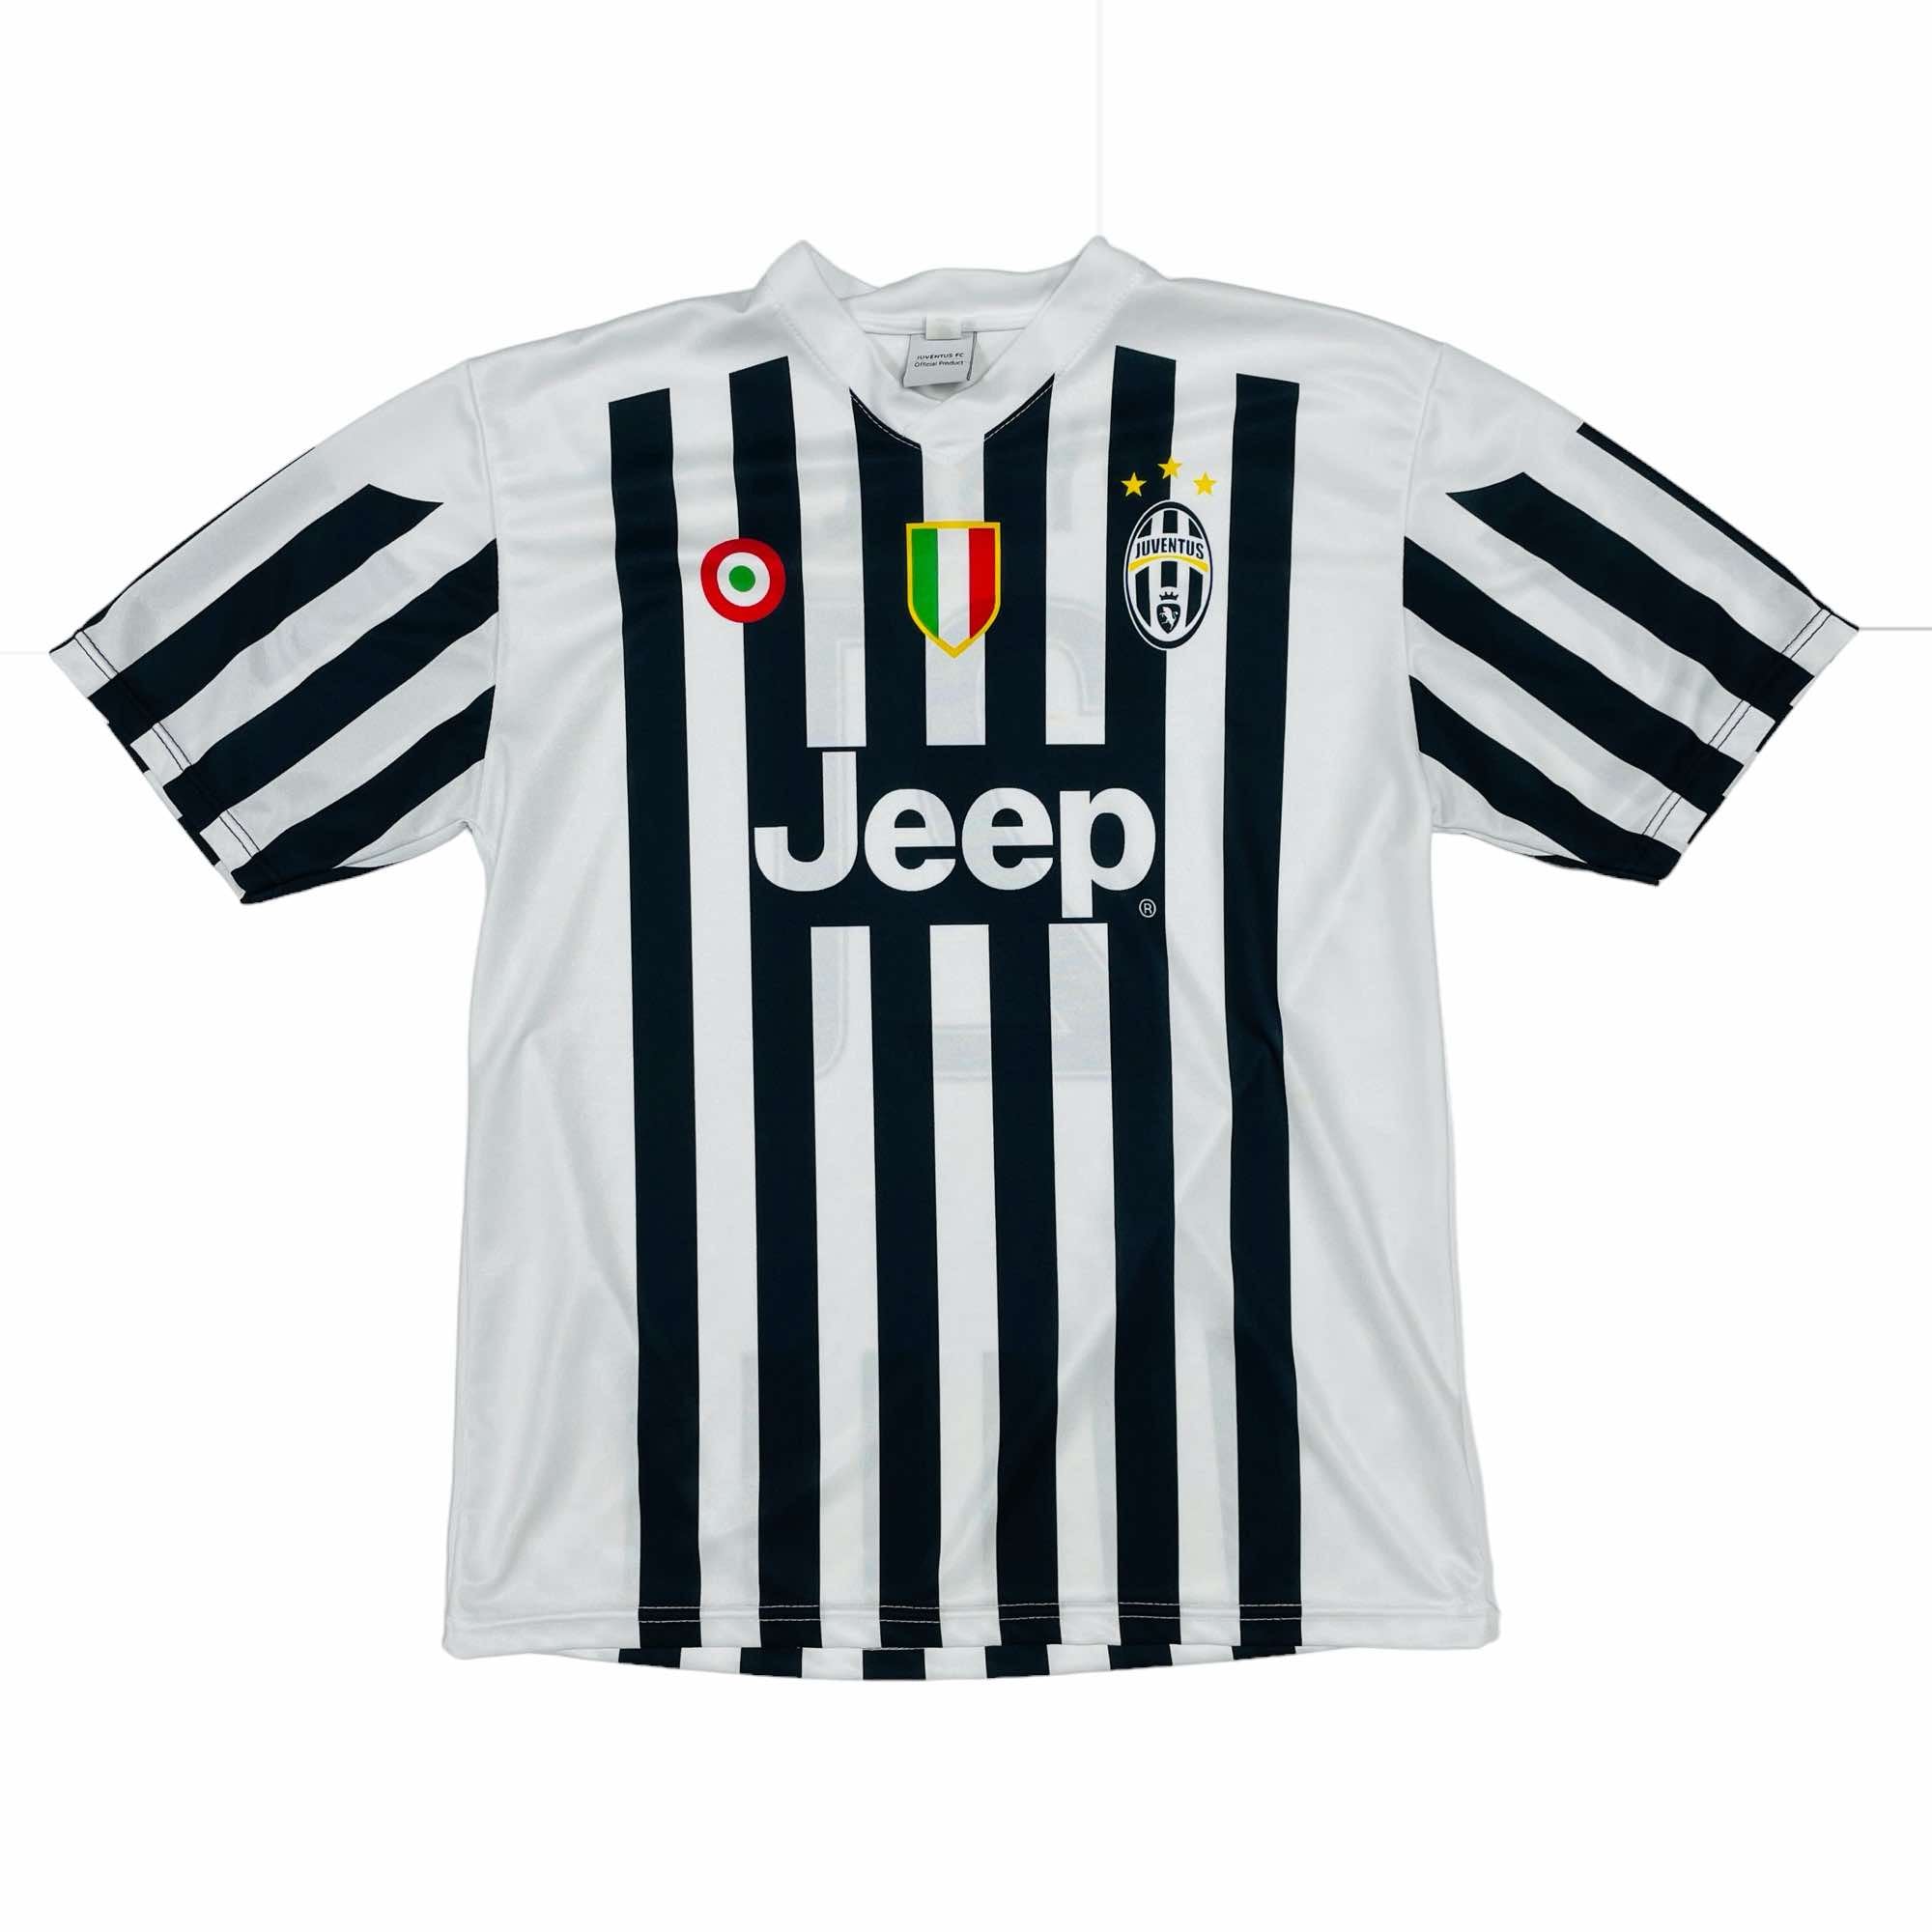 Juventus 2015/16 Paulo Dybala Shirt - Medium